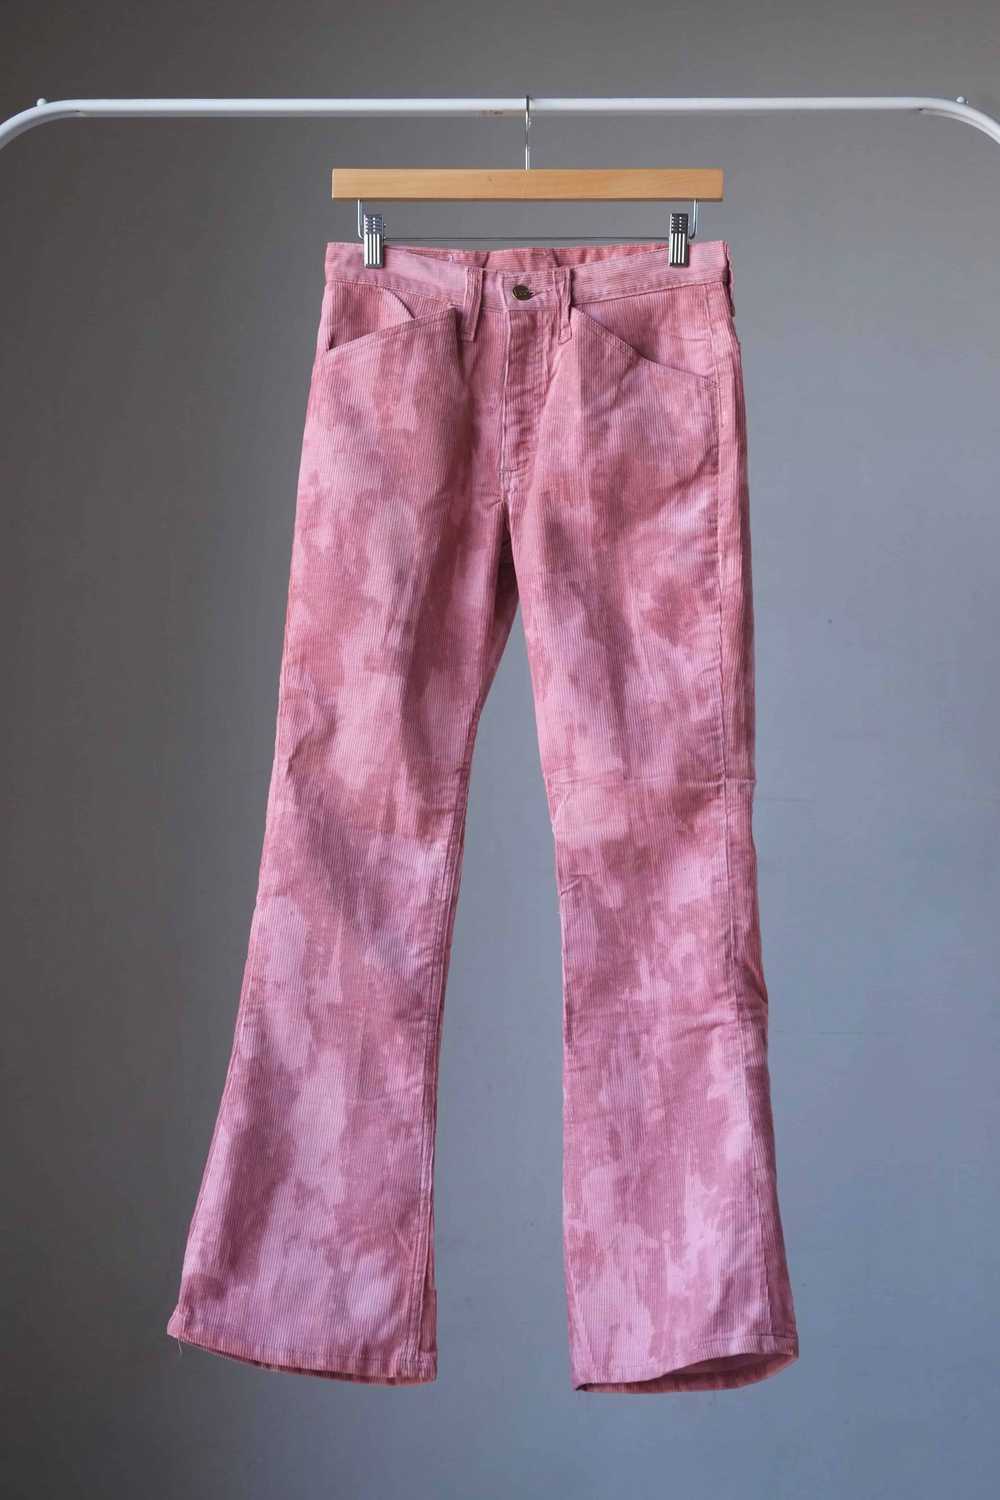 LEE Corduroy Tie-Dye 70's Bell Bottoms - Pink - image 2